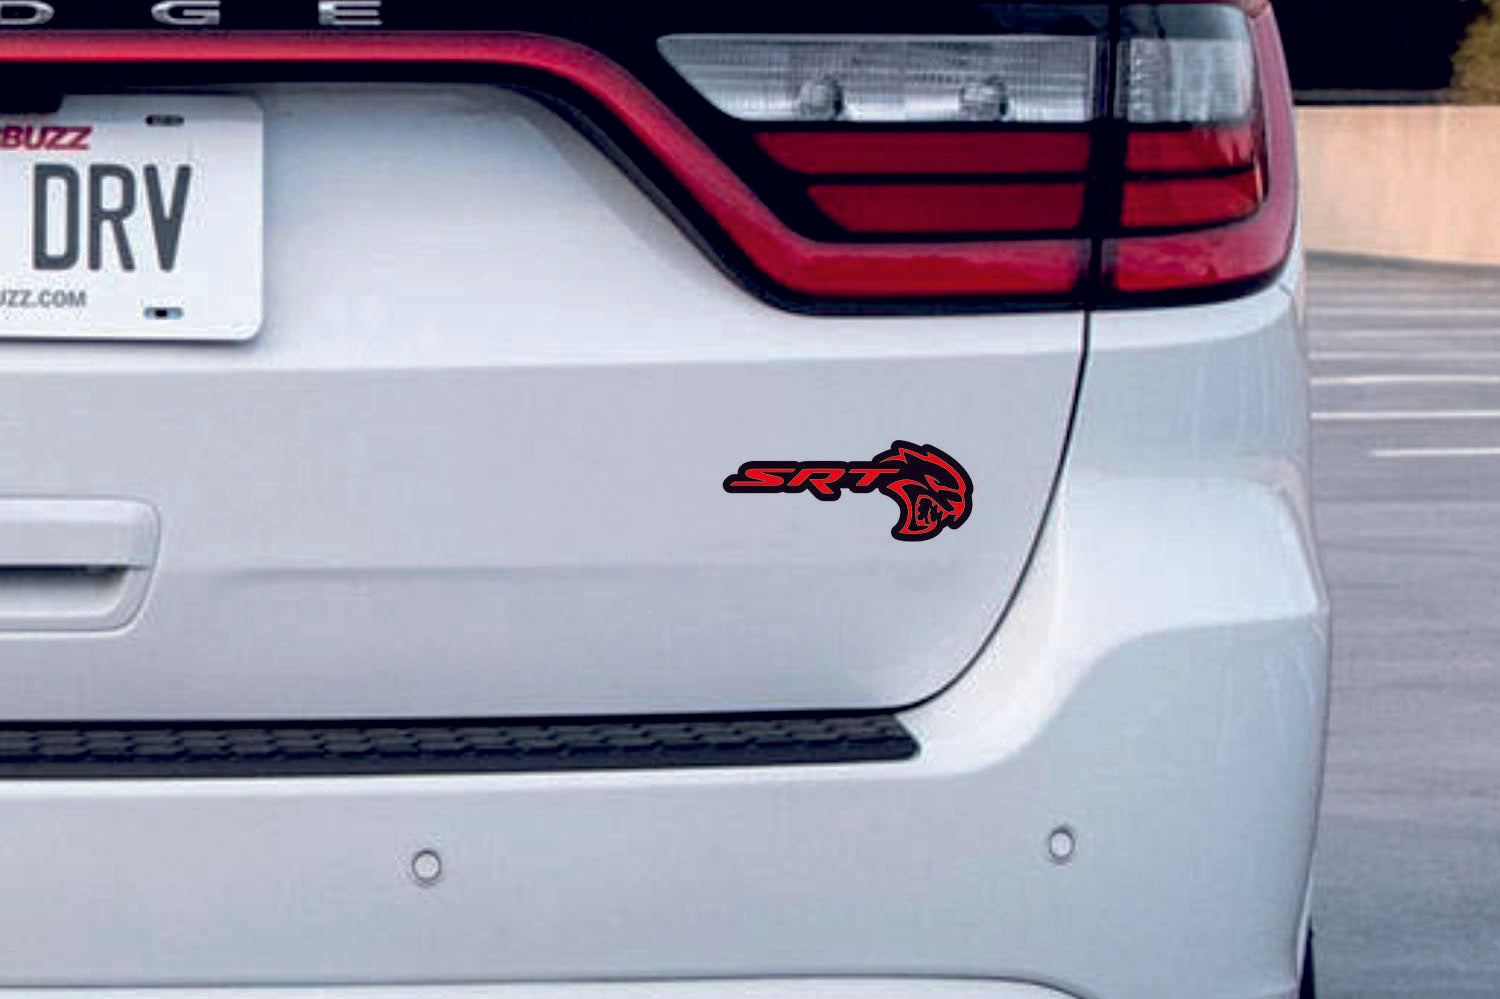 Dodge tailgate trunk rear emblem with SRT Hellcat logo